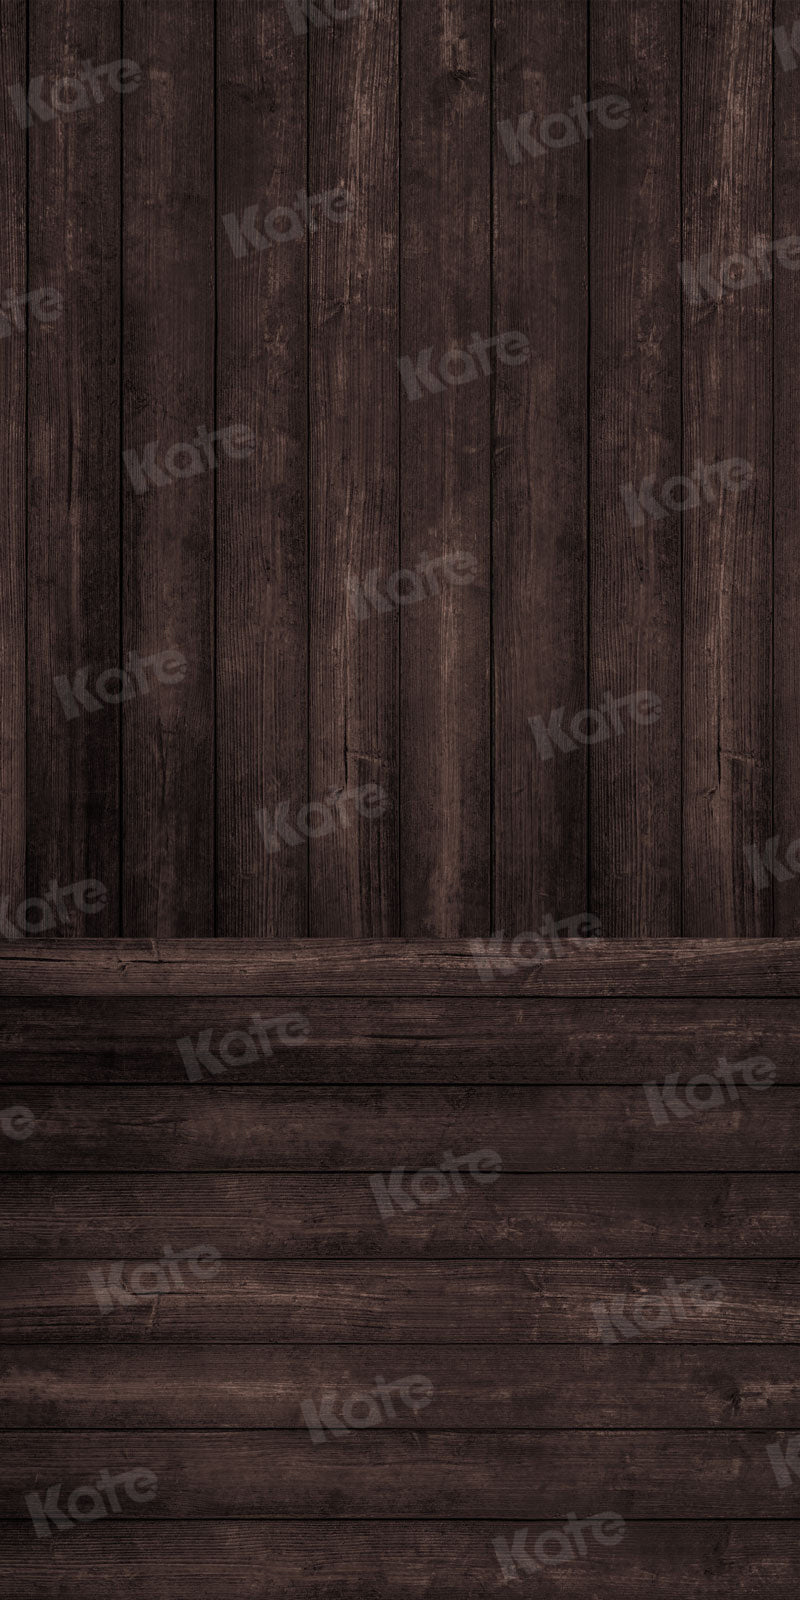 Kate Sweep Dark Planks Backdrop Wood Grain for Photography